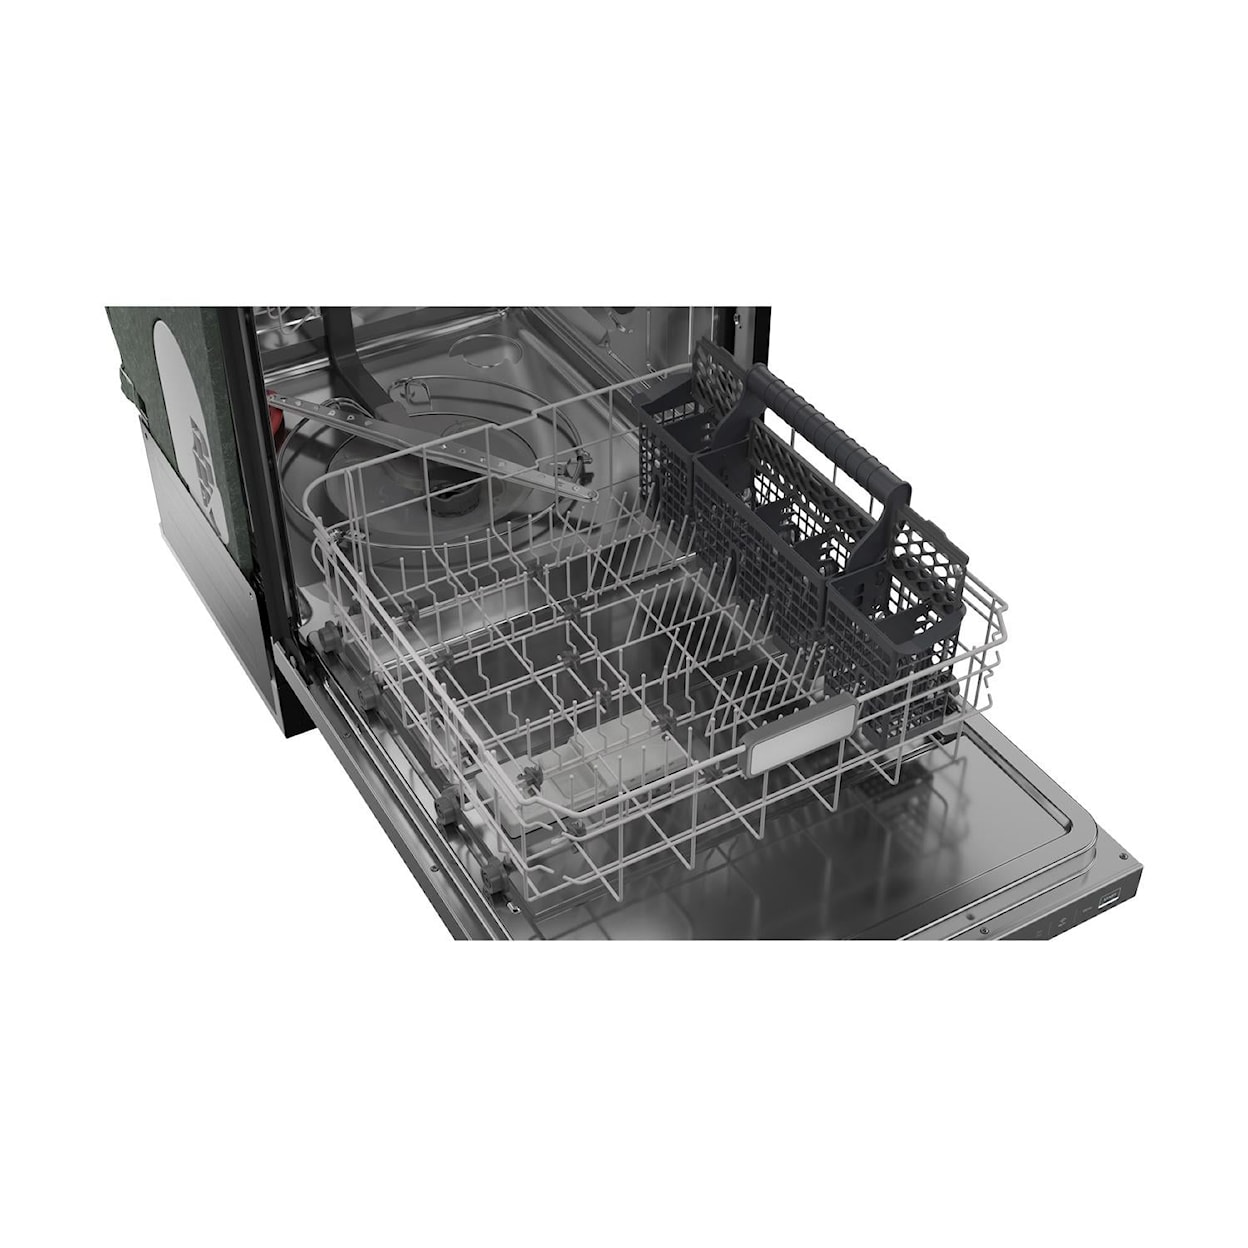 Sharp Appliances Dishwashers Built In Dishwasher